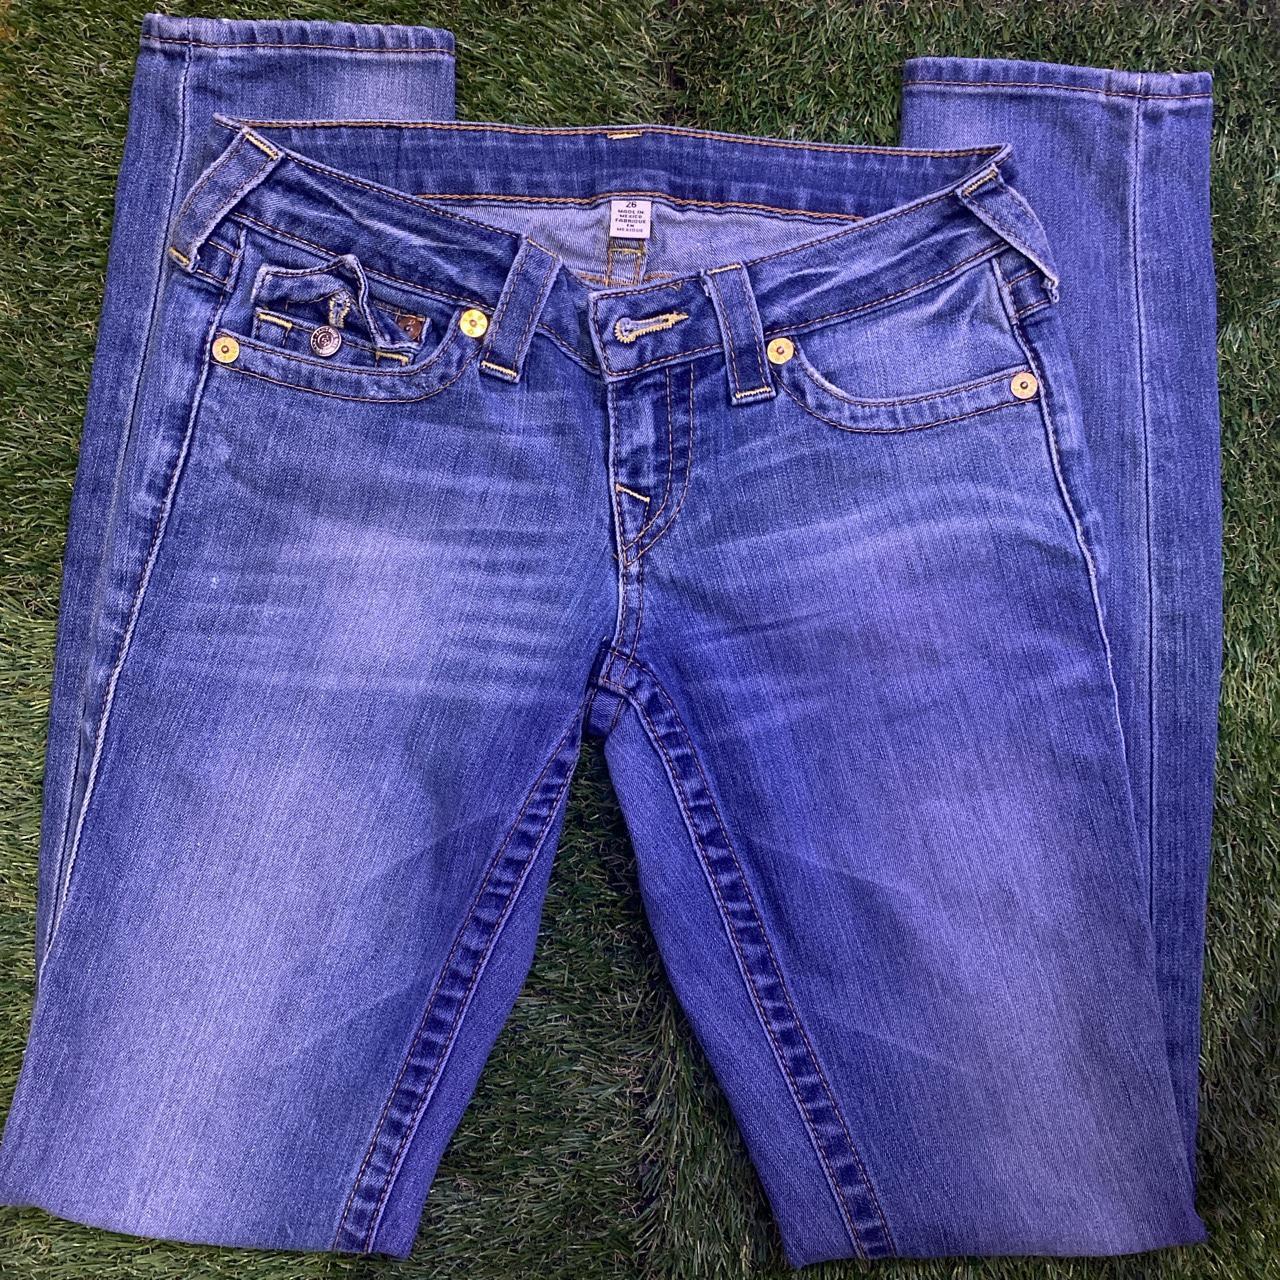 Skinny true religion jeans nice fade Overall no flaws - Depop